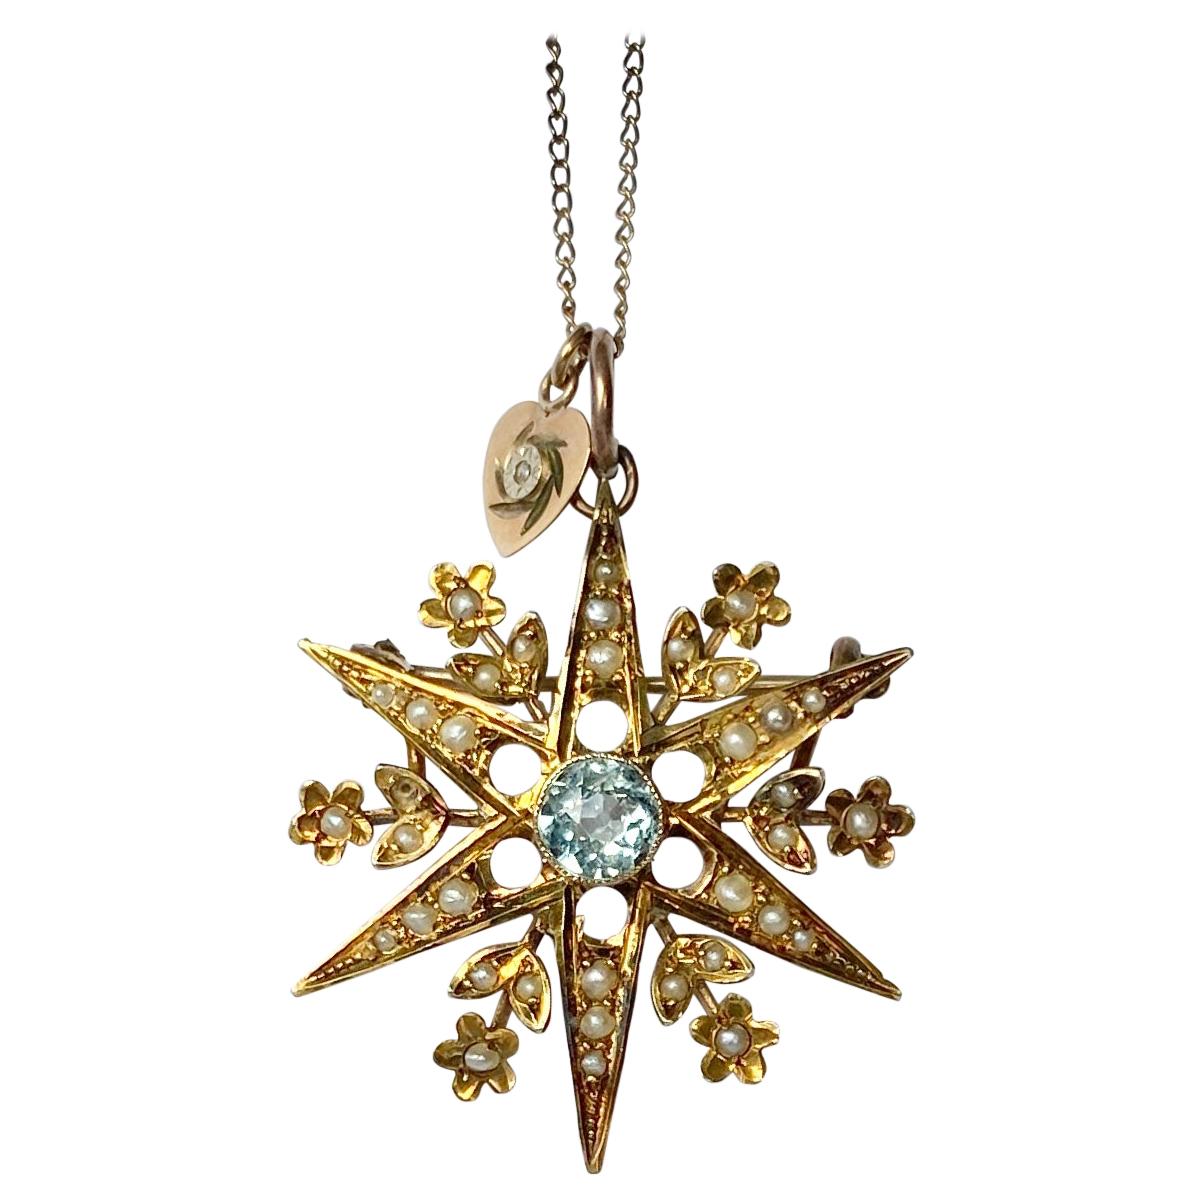 Edwardian Aqua and Pearl 9 Carat Gold Star Brooch or Pendant